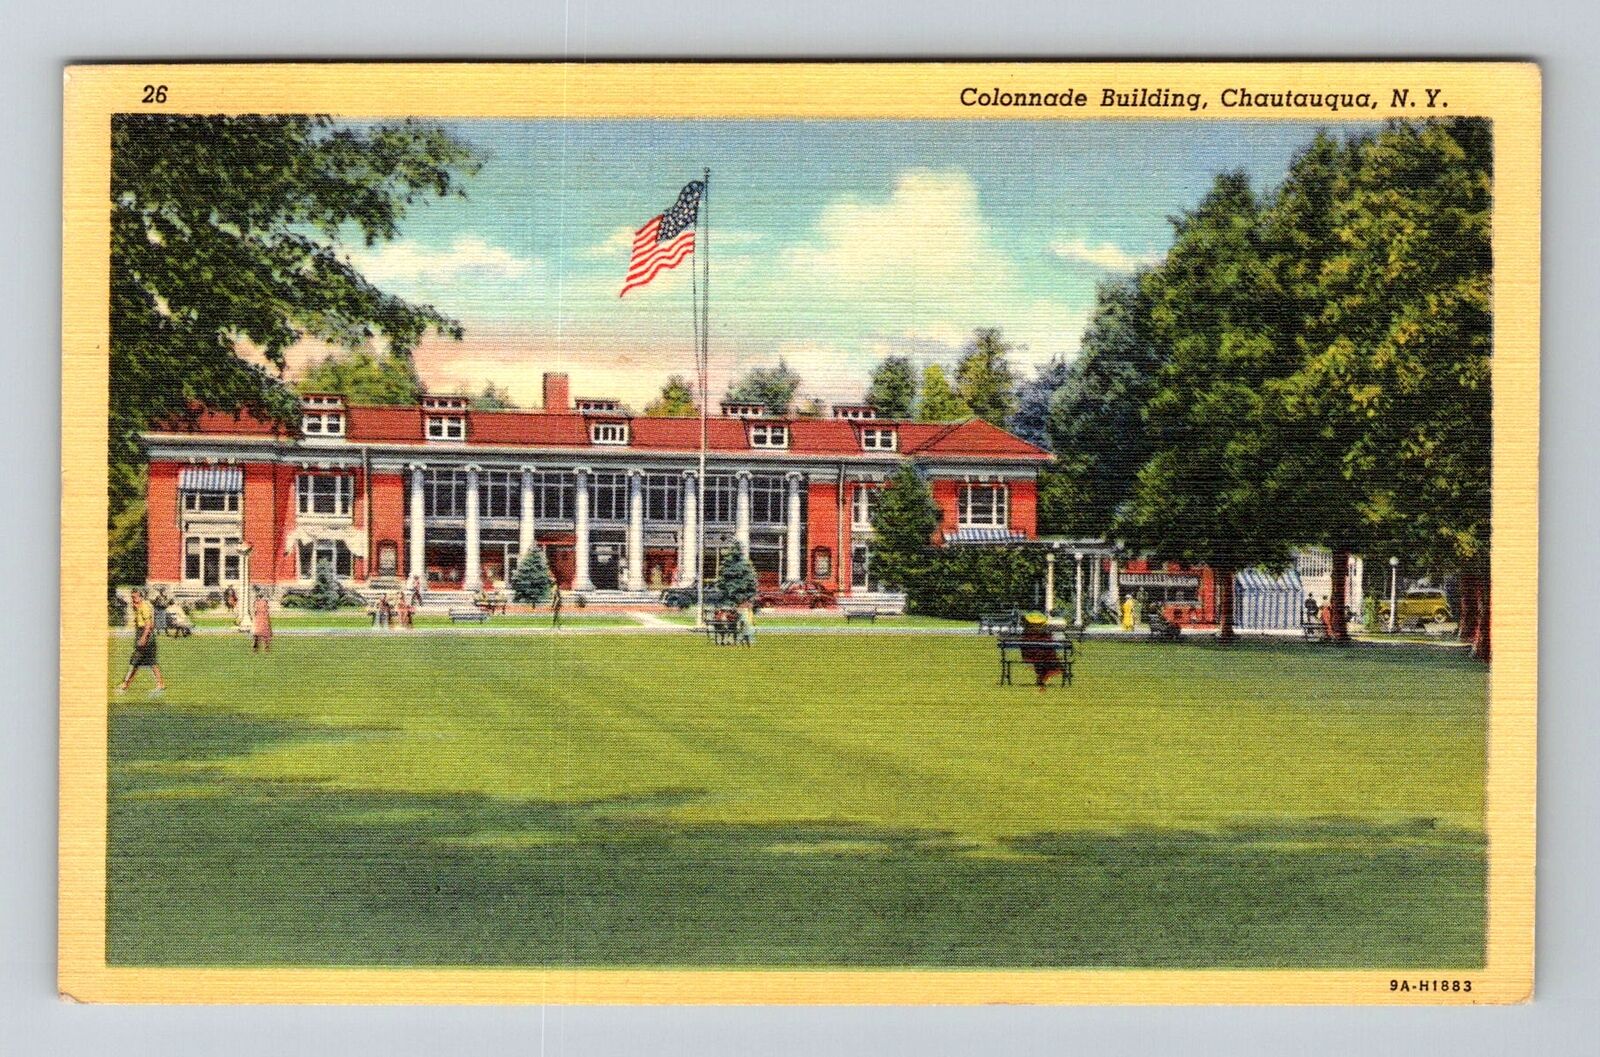 Chautauqua NY-New York, Colonnade Building Vintage Souvenir Postcard